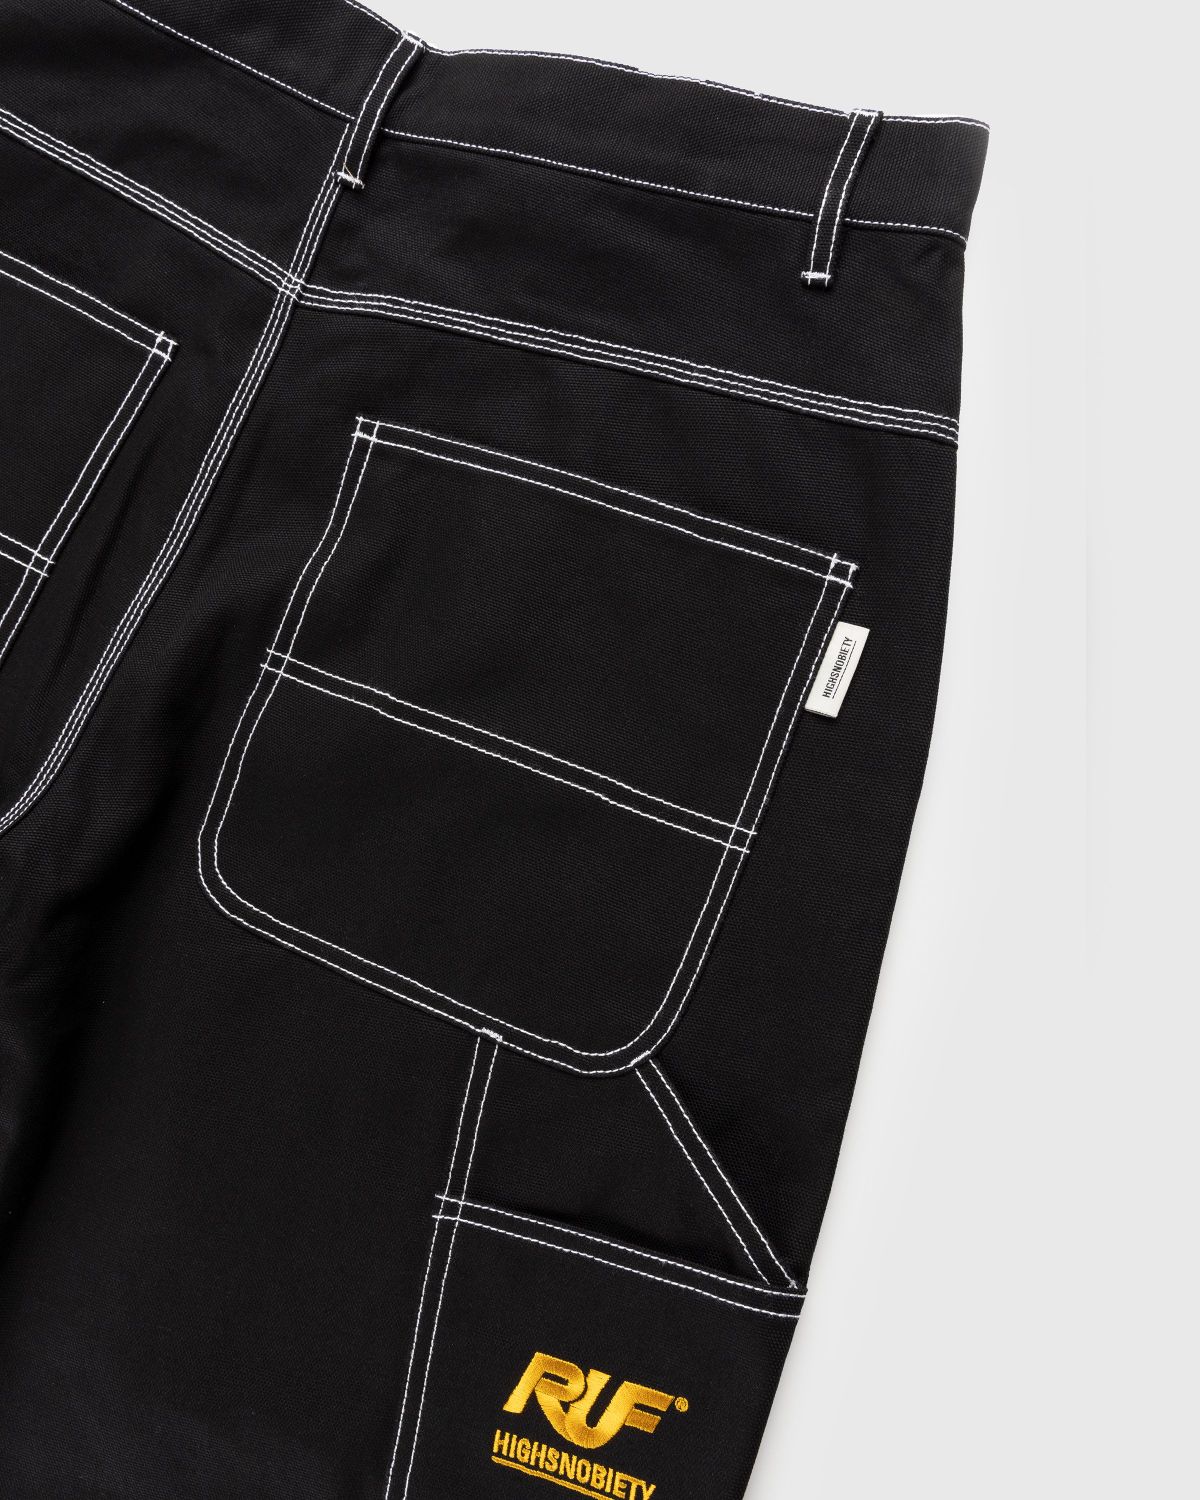 RUF x Highsnobiety – Cotton Work Pants Black - Pants - Black - Image 4